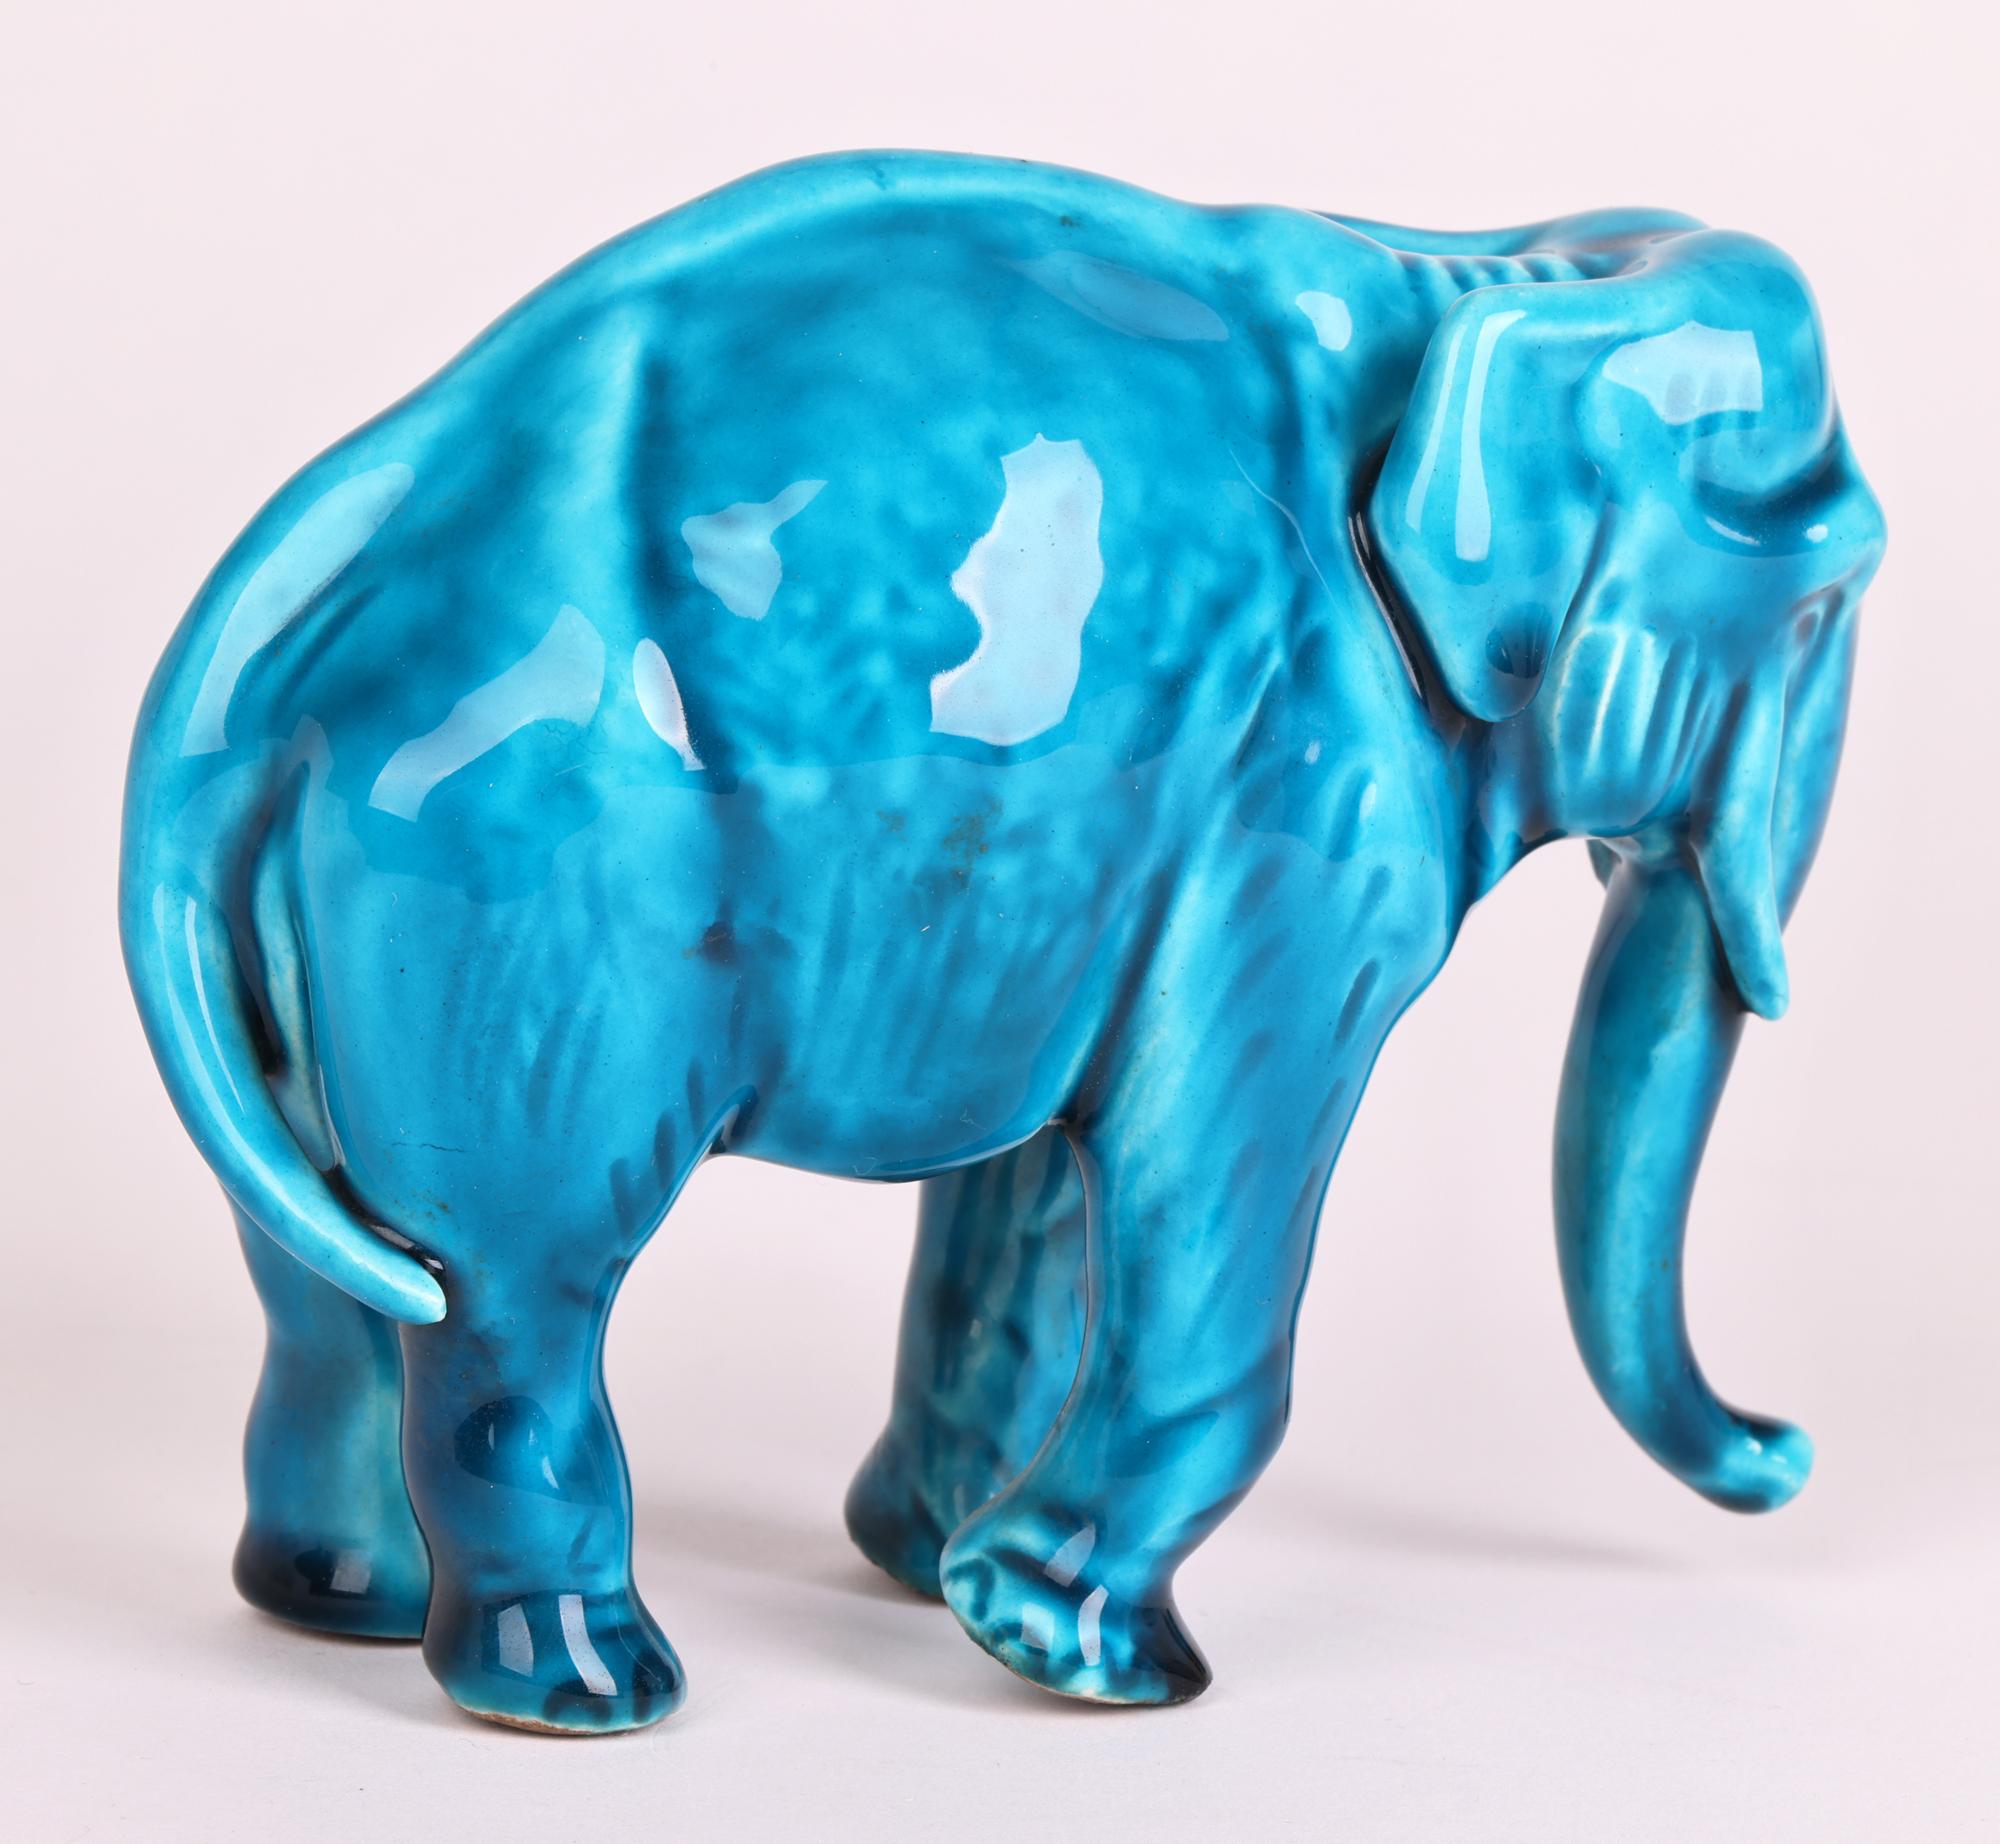 Paul Milet Sevres Turquoise Glazed Ceramic Elephant Figure    For Sale 5